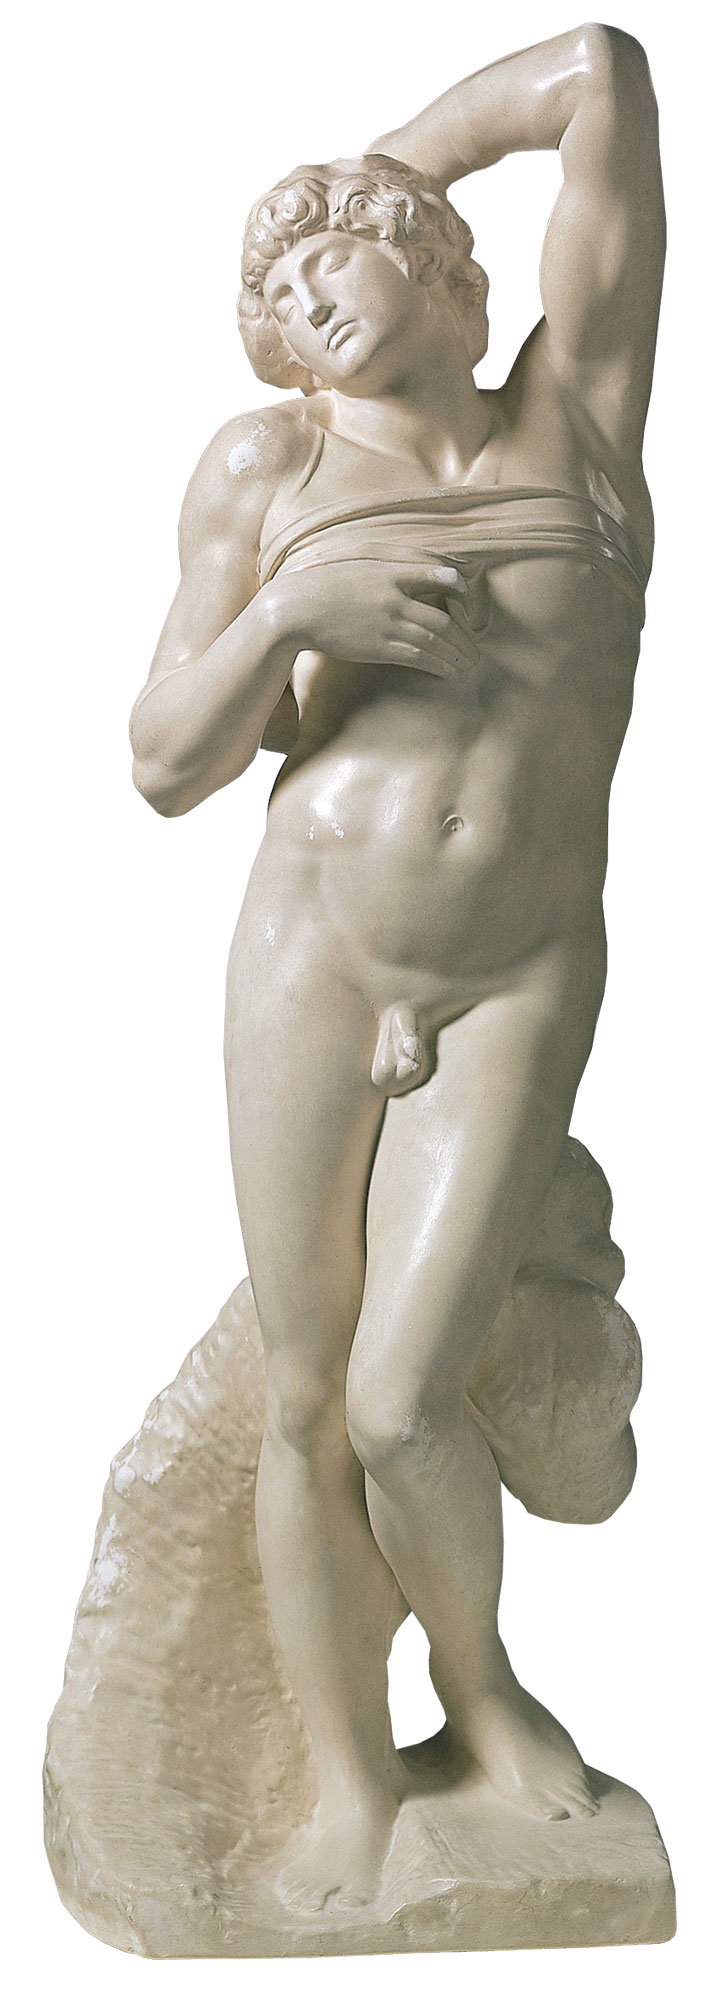 Skulptur "Sterbender Sklave" (1513), Reduktion in Kunstmarmor von Michelangelo Buonarroti